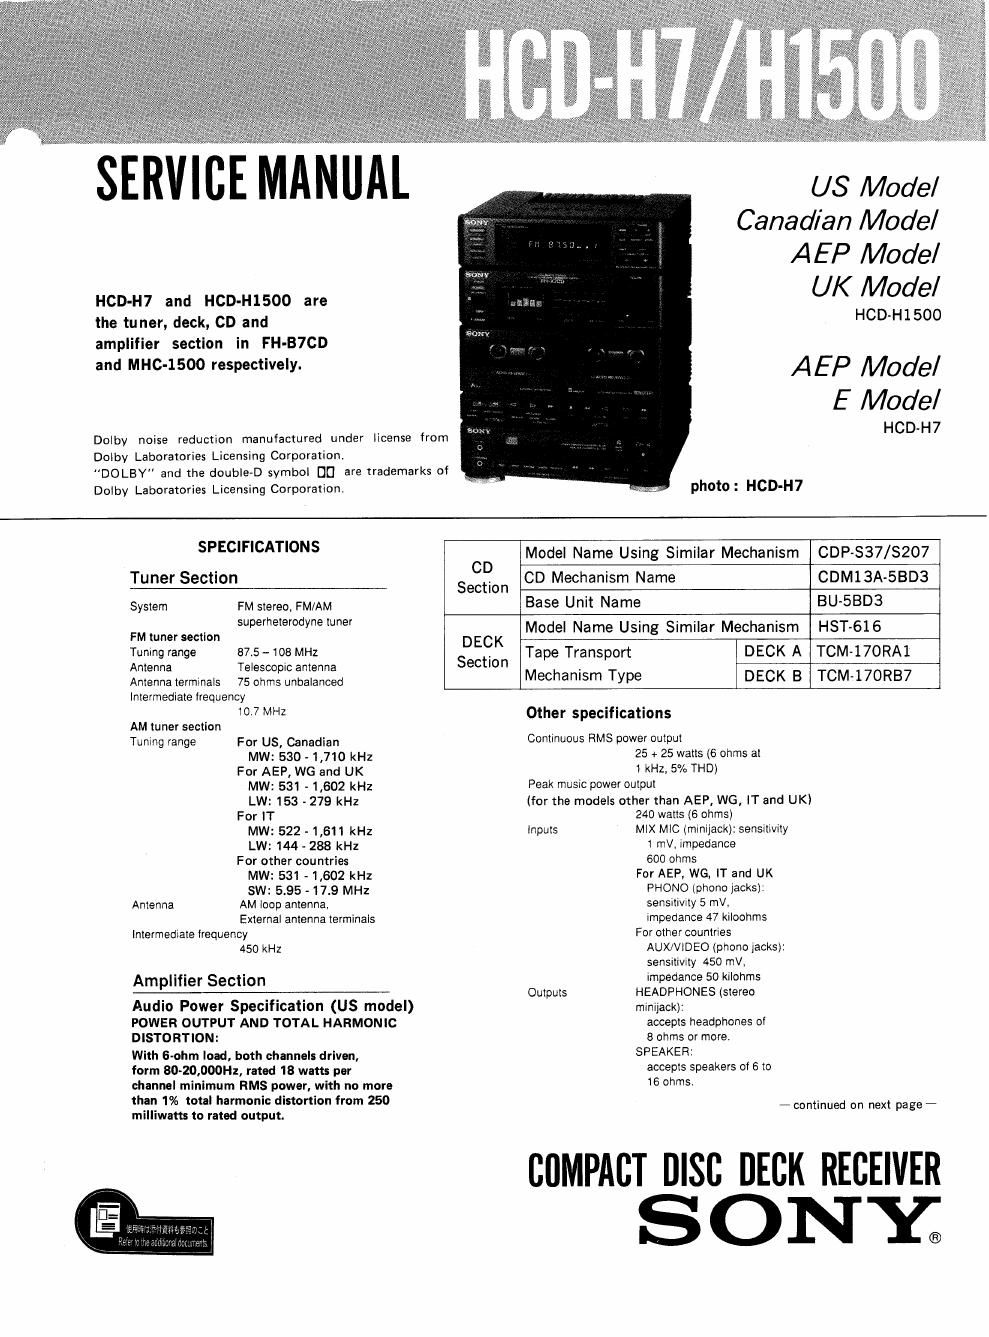 sony hcd h 1500 service manual